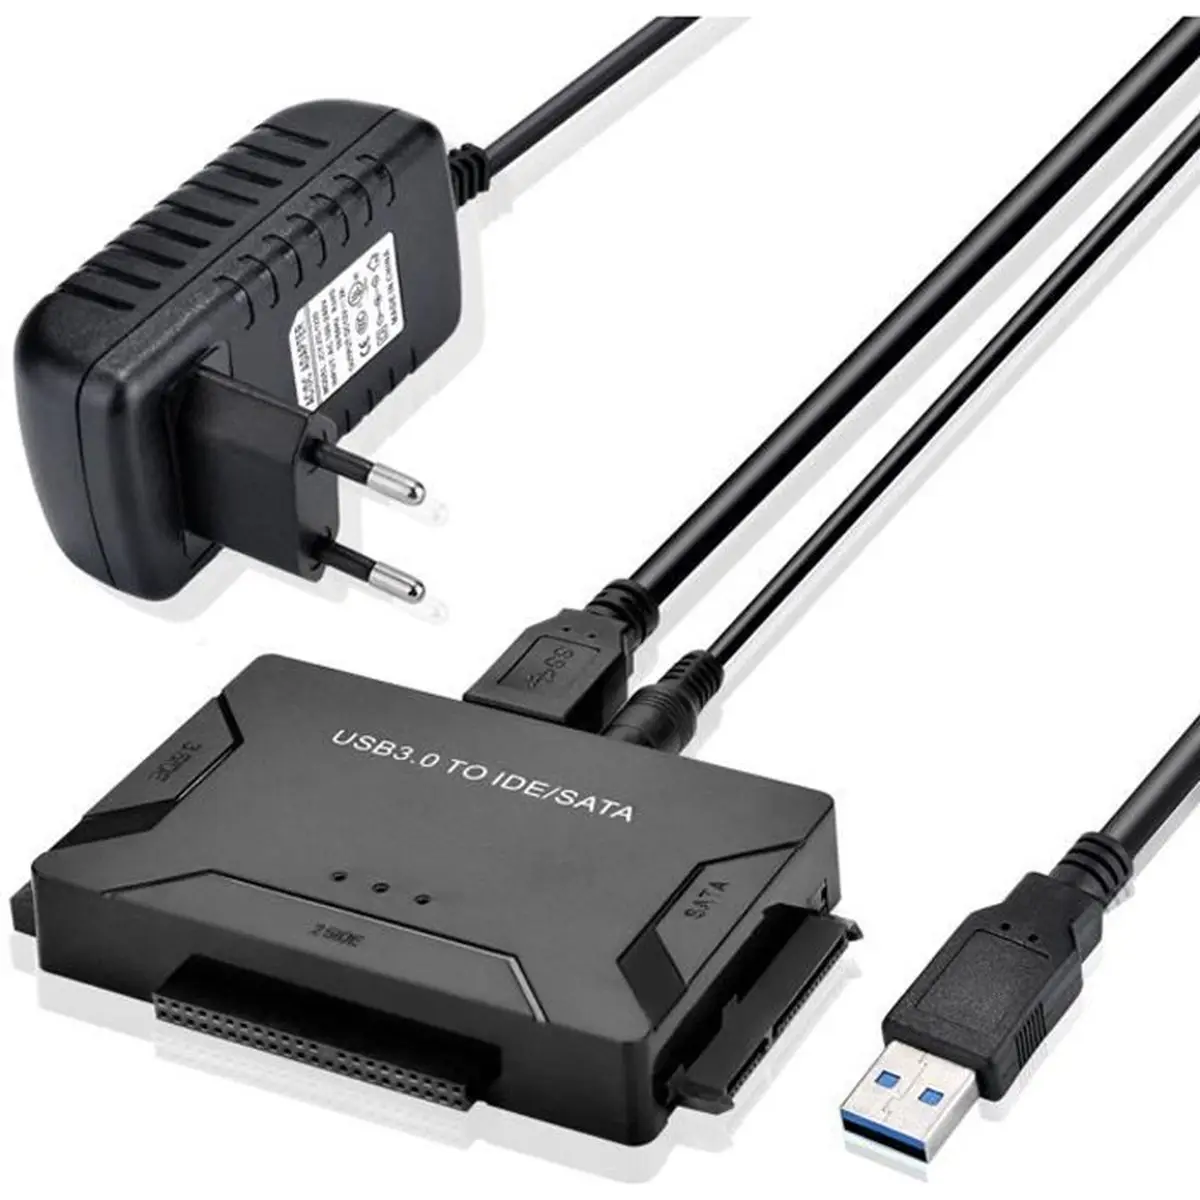 Usb c sata. Переходник USB SATA ide 2.5/3.5. USB SATA 3.5 HDD SATA адаптер. SATA USB 3.0 переходник HDD. Переходник для HDD 3.5 SATA на USB С питанием.